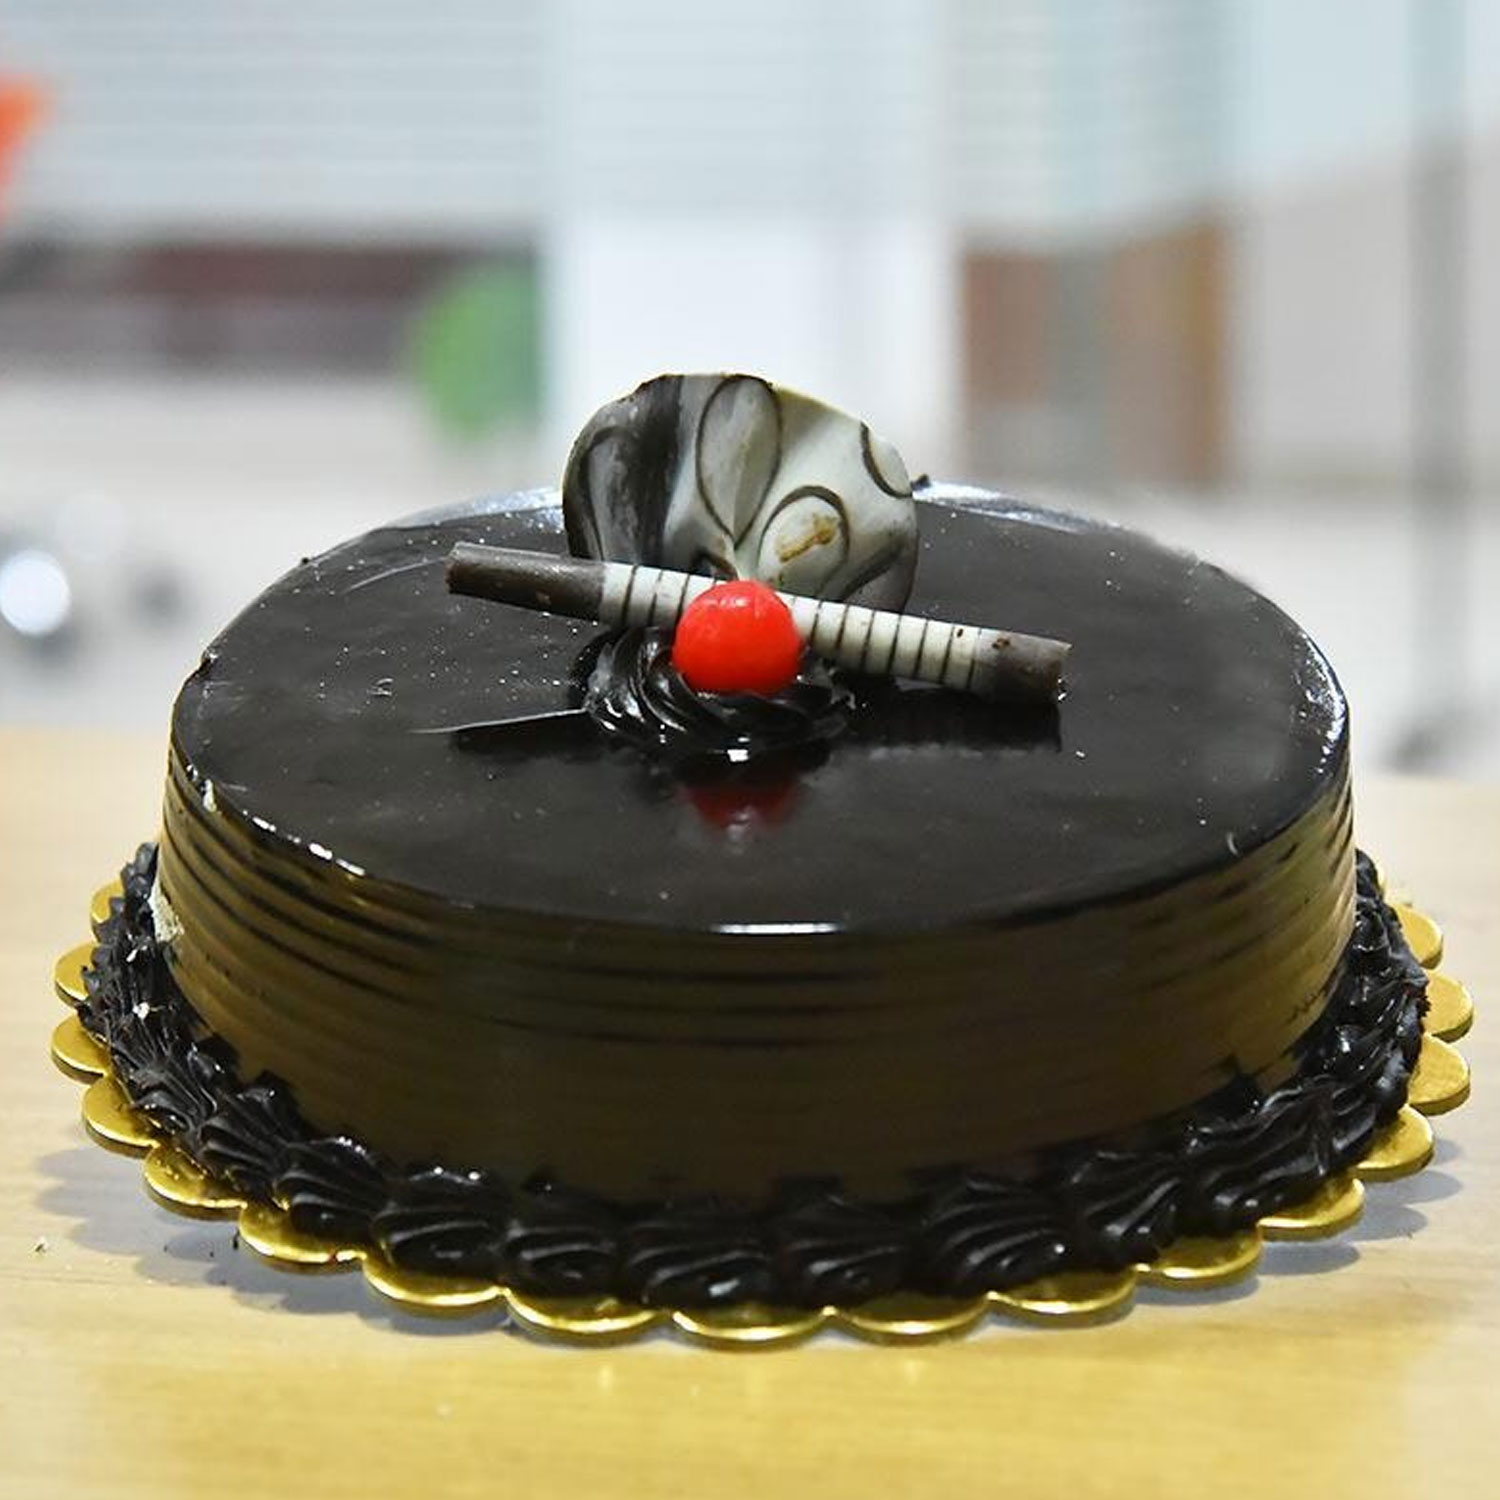 dial-a-cake in Tirupati - Best Cake Delivery Services in Tirupati - Justdial